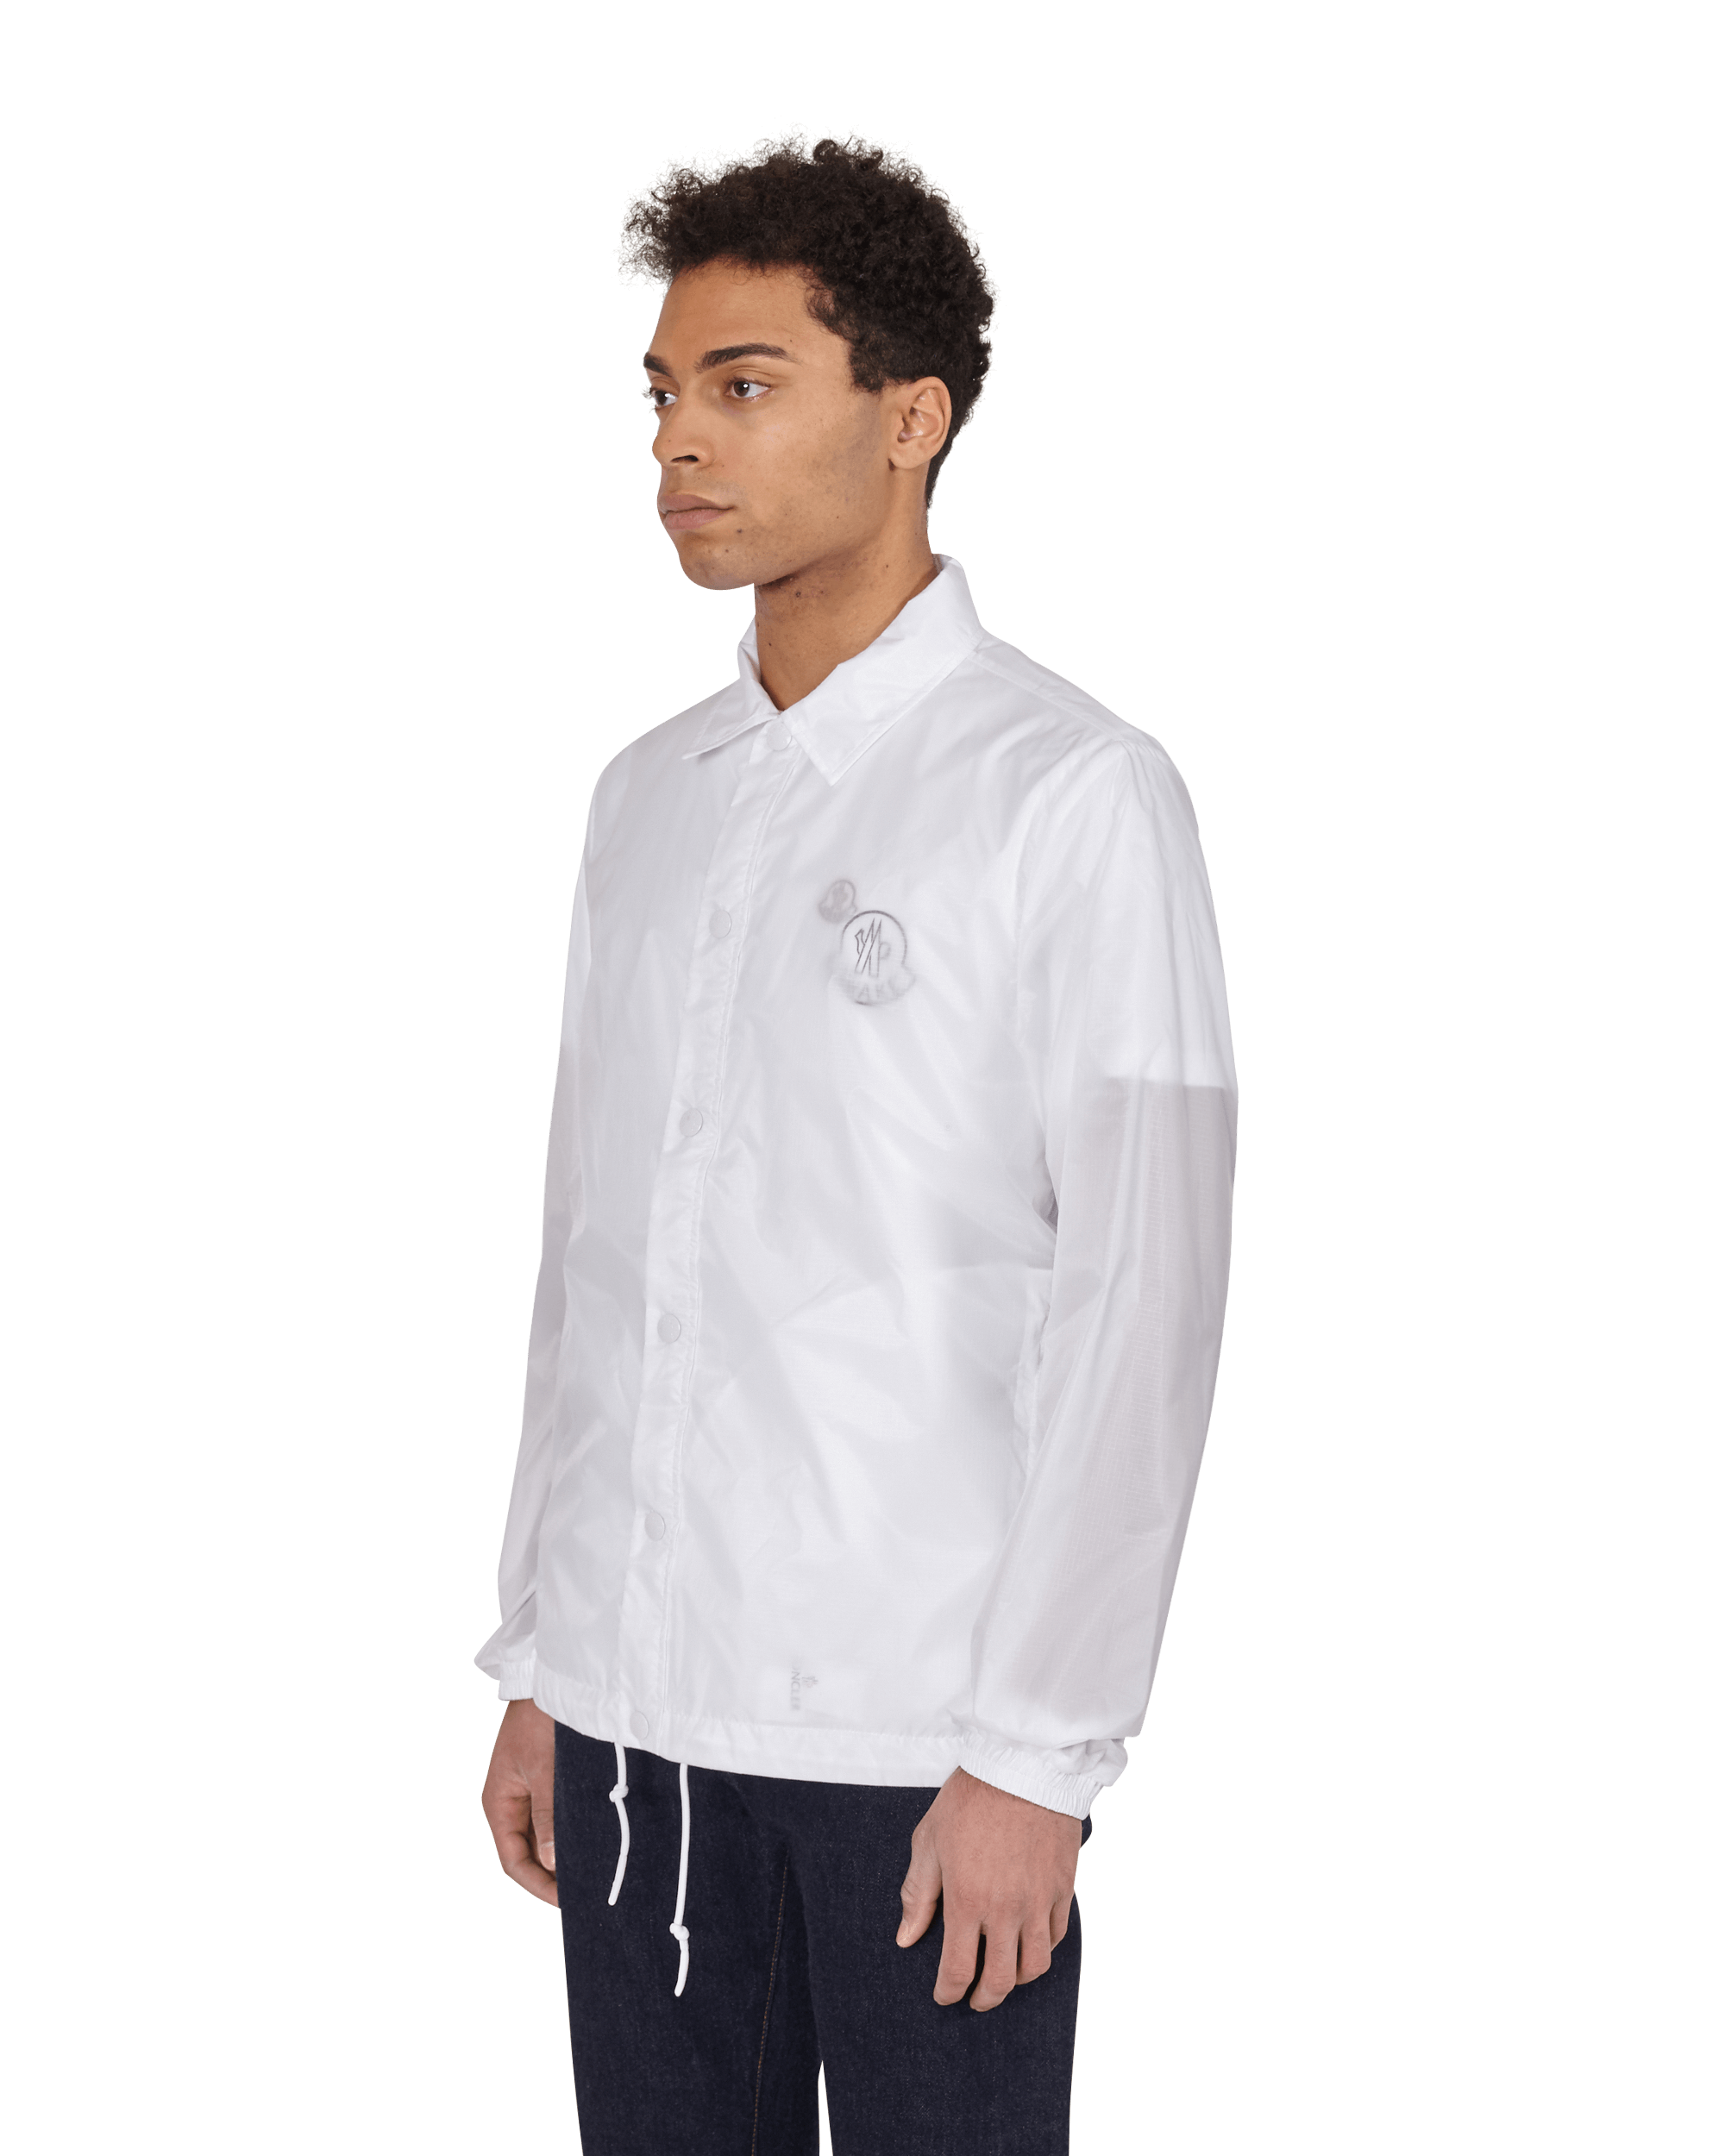 Moncler Grenoble Moncler X Awake Sangay White Coats and Jackets Jackets 1A708-10C0518 001